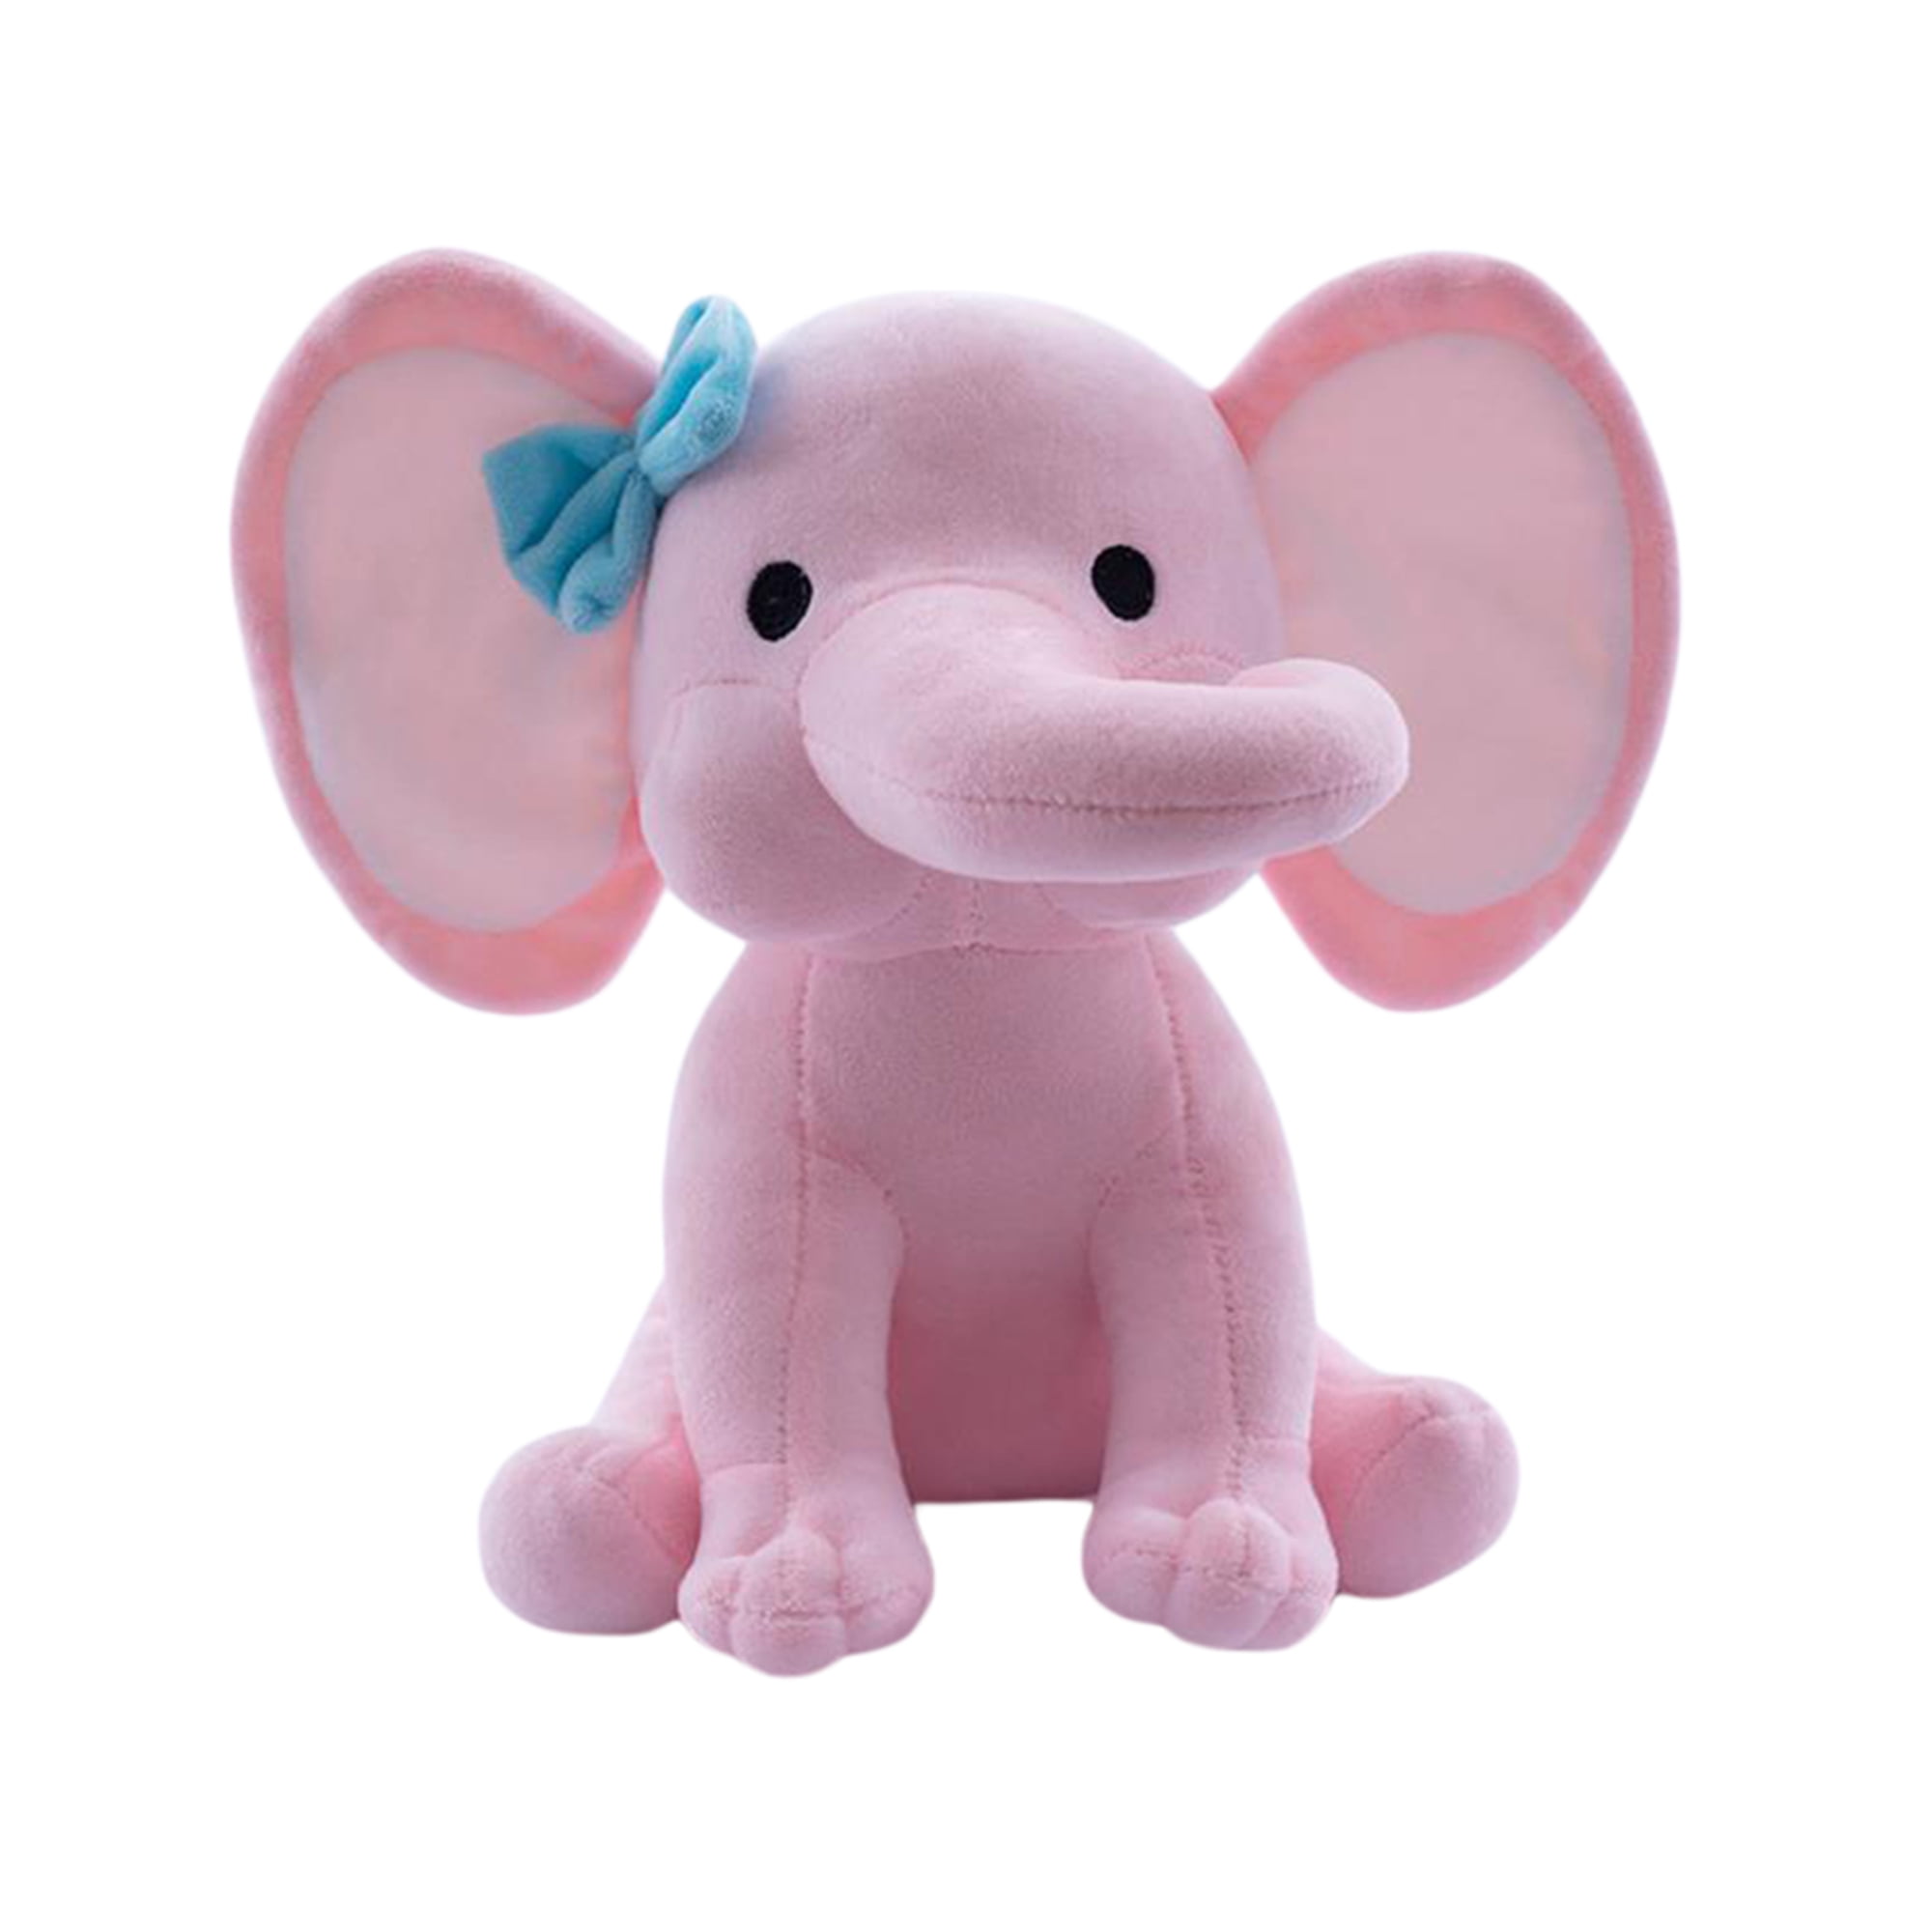 New 27'' Cute Simulation Elephant Stuffed Animal Doll Plush Soft Toy Kids Gift 